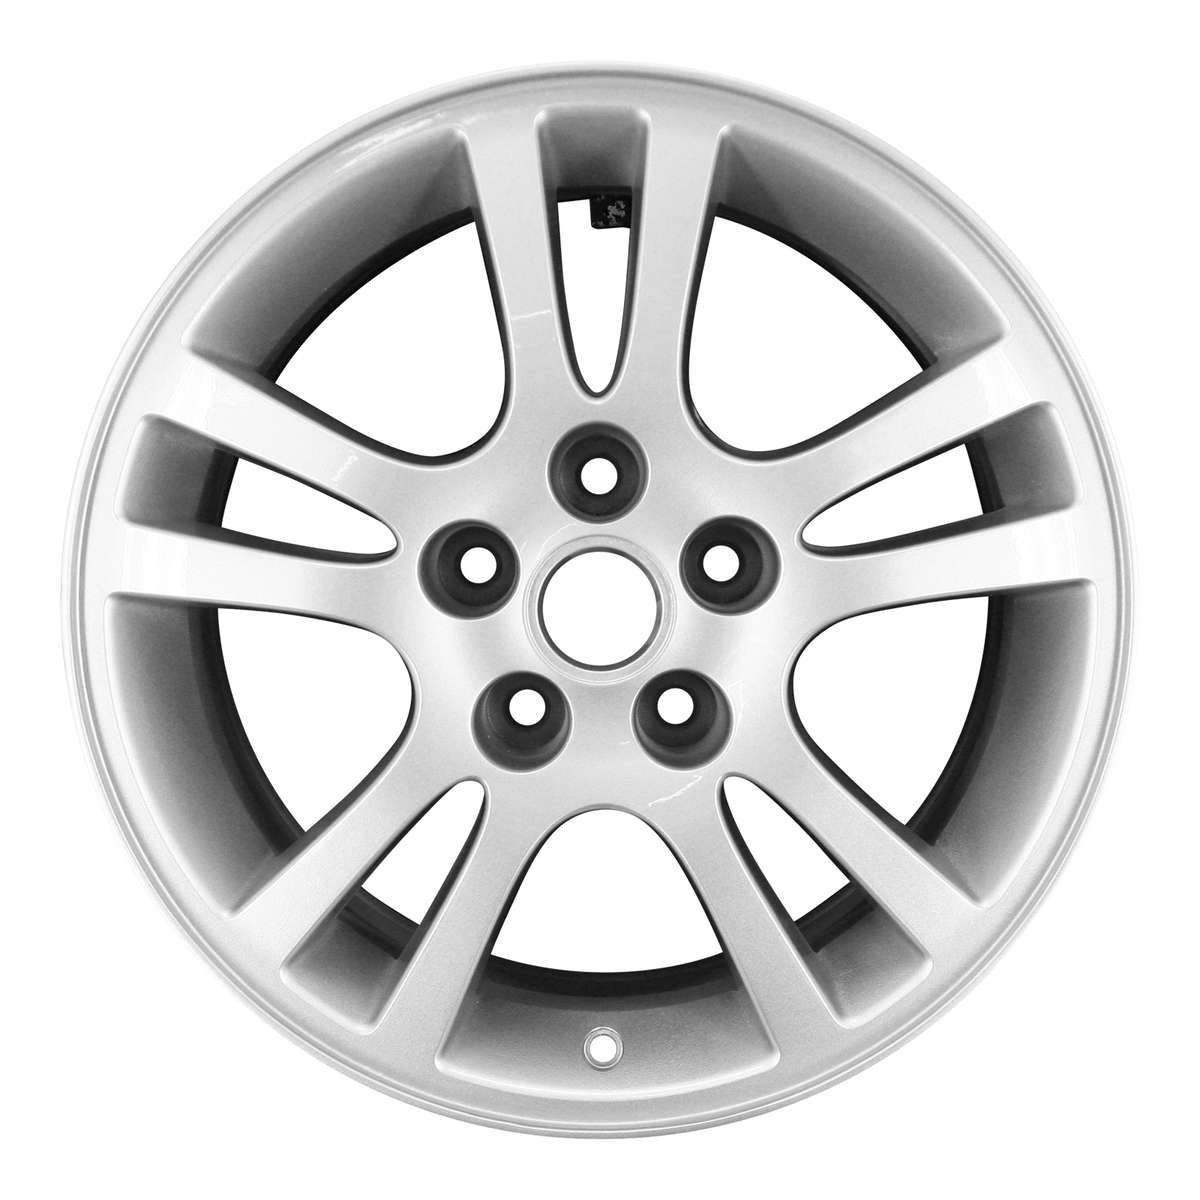 2006 Pontiac G6 16" OEM Wheel Rim W6582S